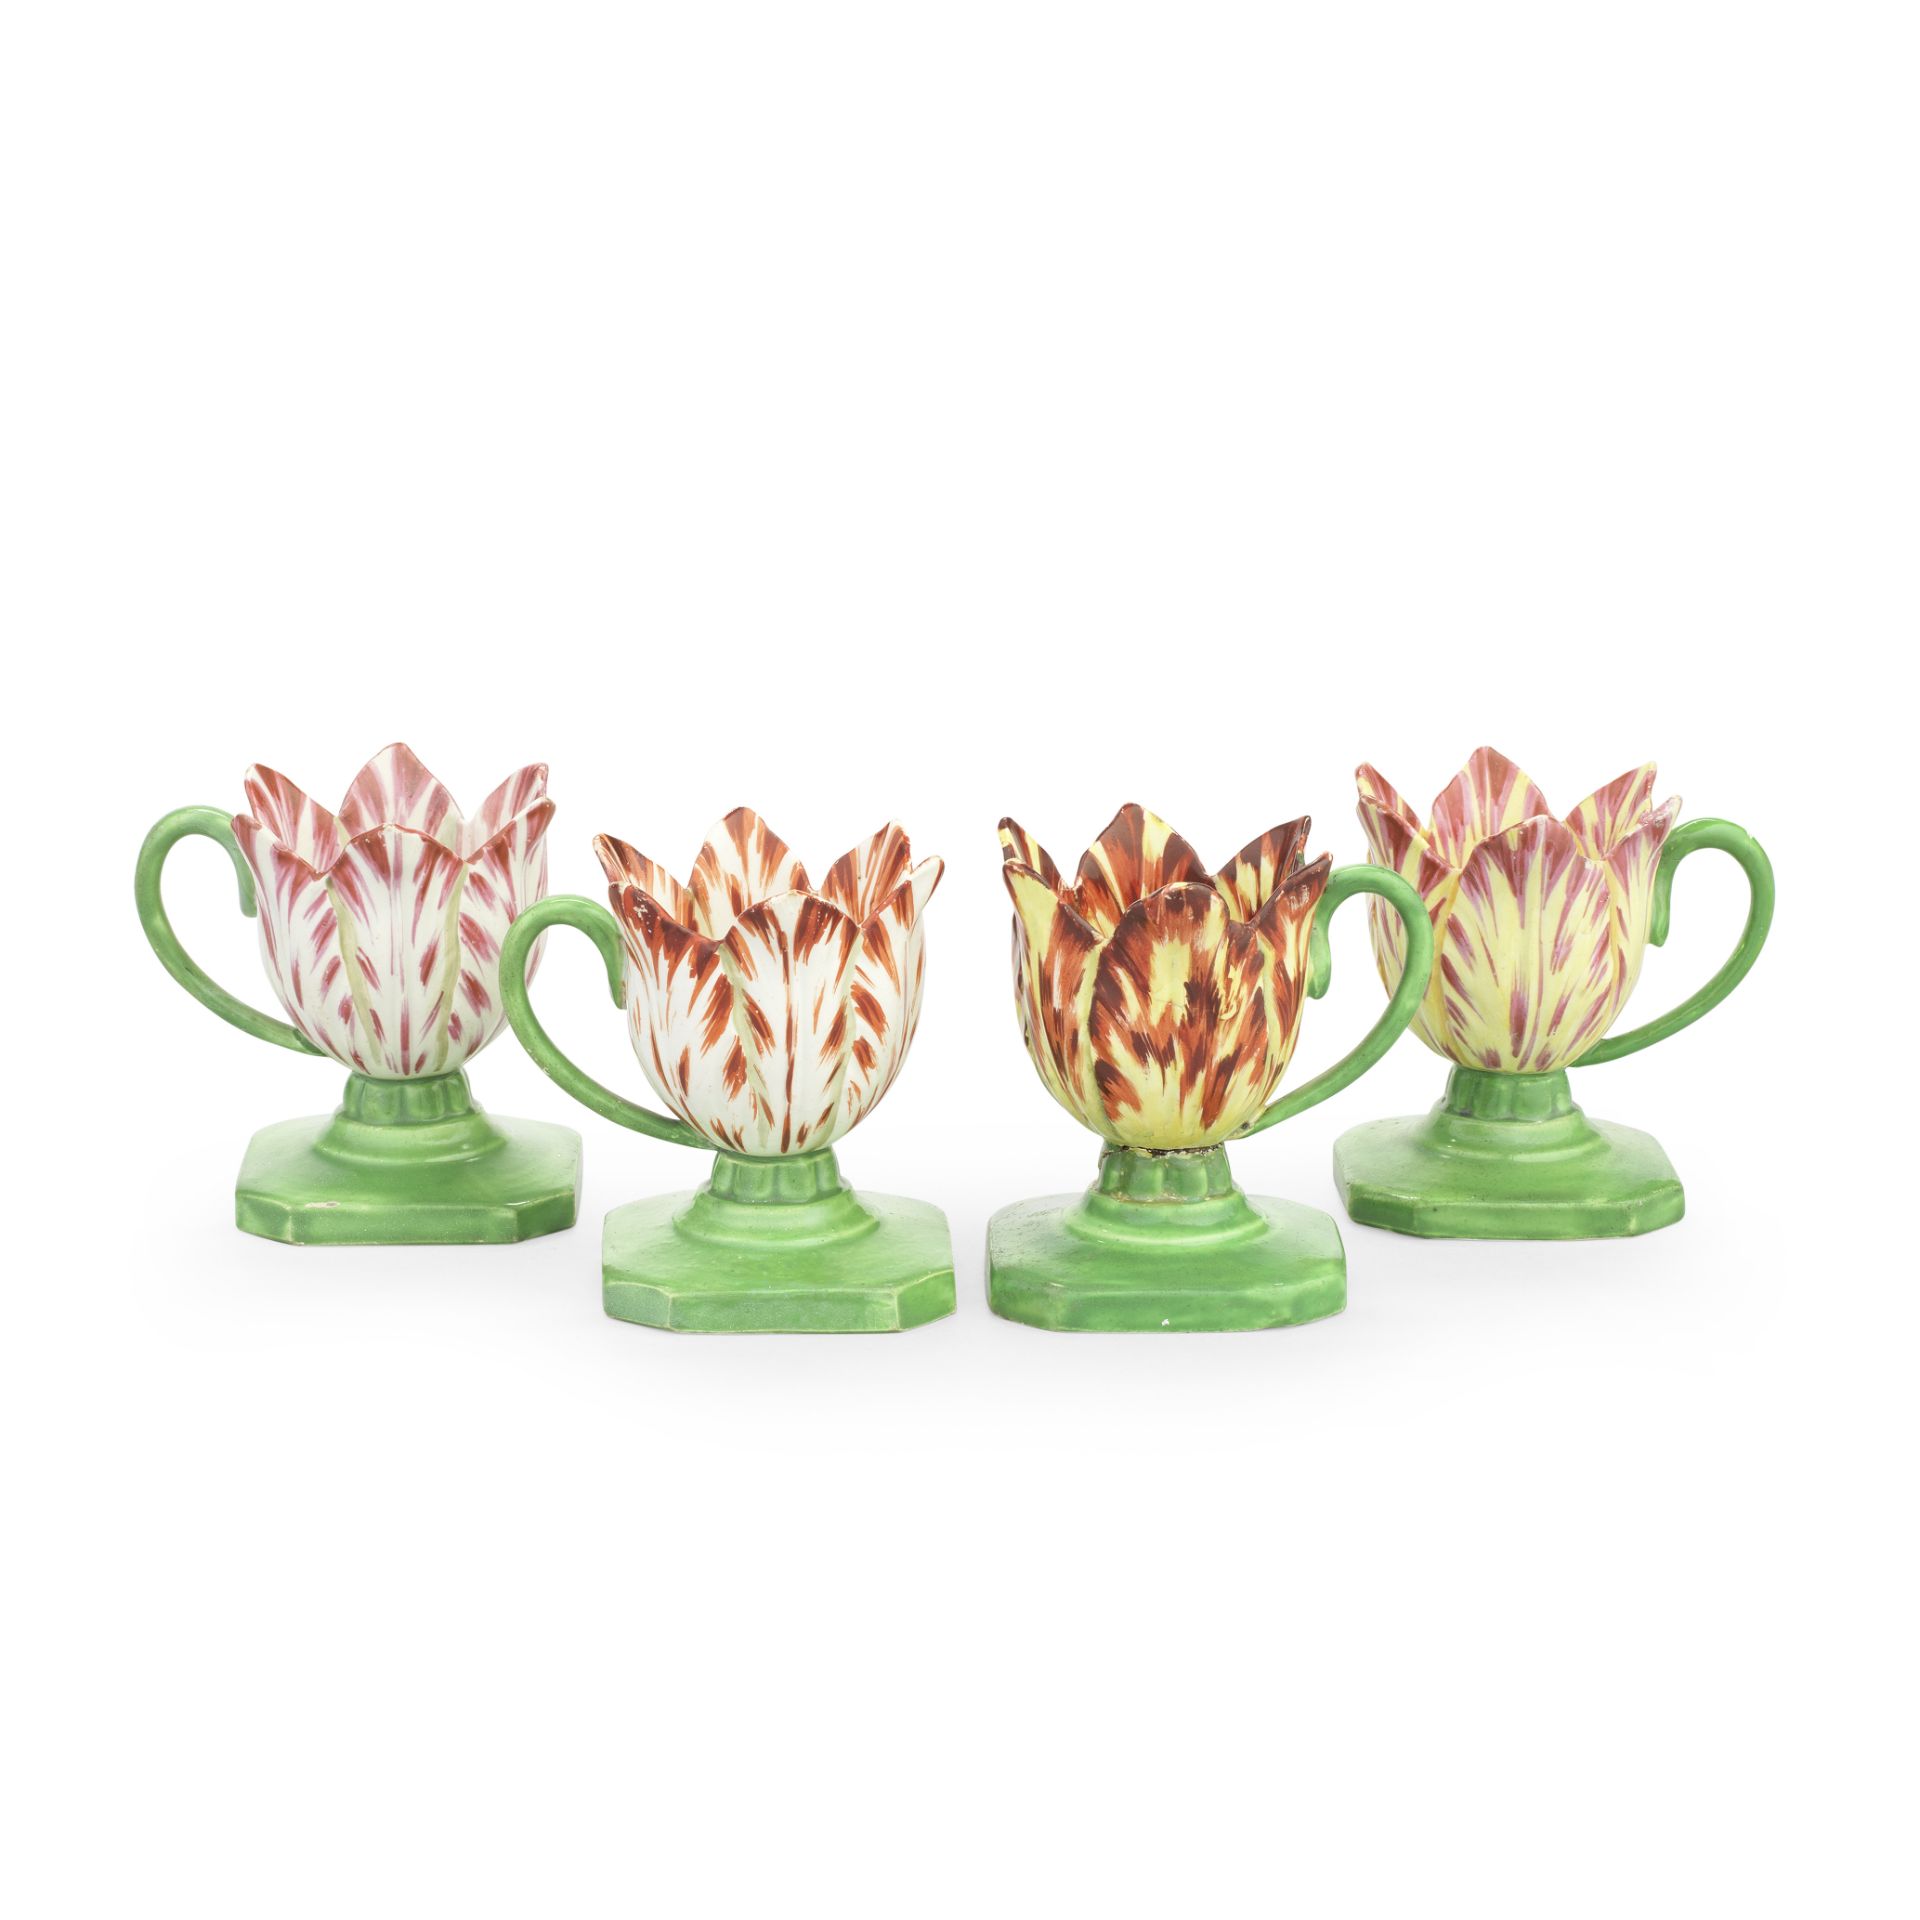 Four rare Spode pearlware tulip cups, circa 1820